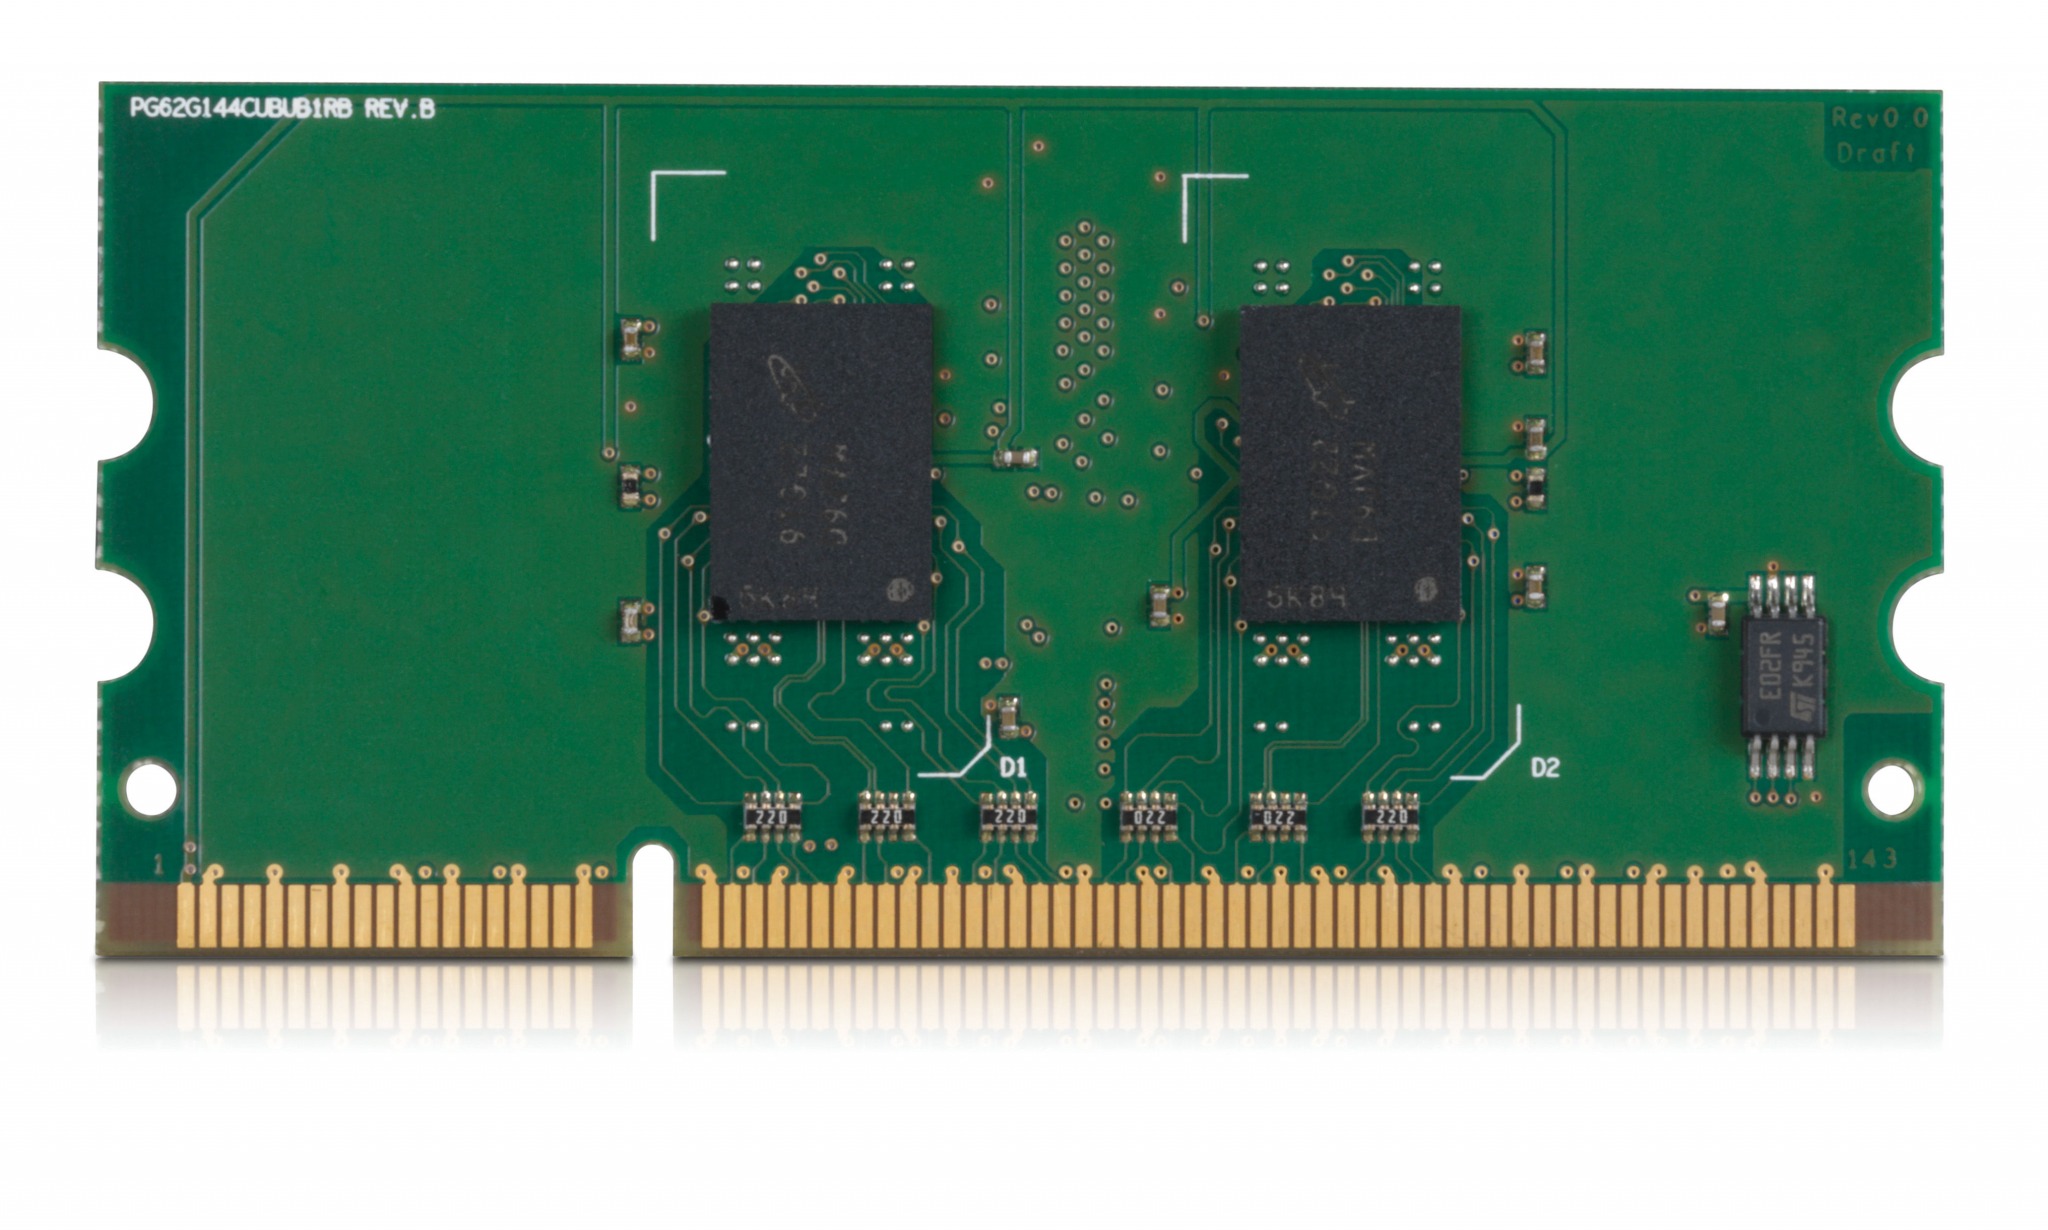 DIMM Memory 256mb. Ddr2 256mb. Купить память на 256